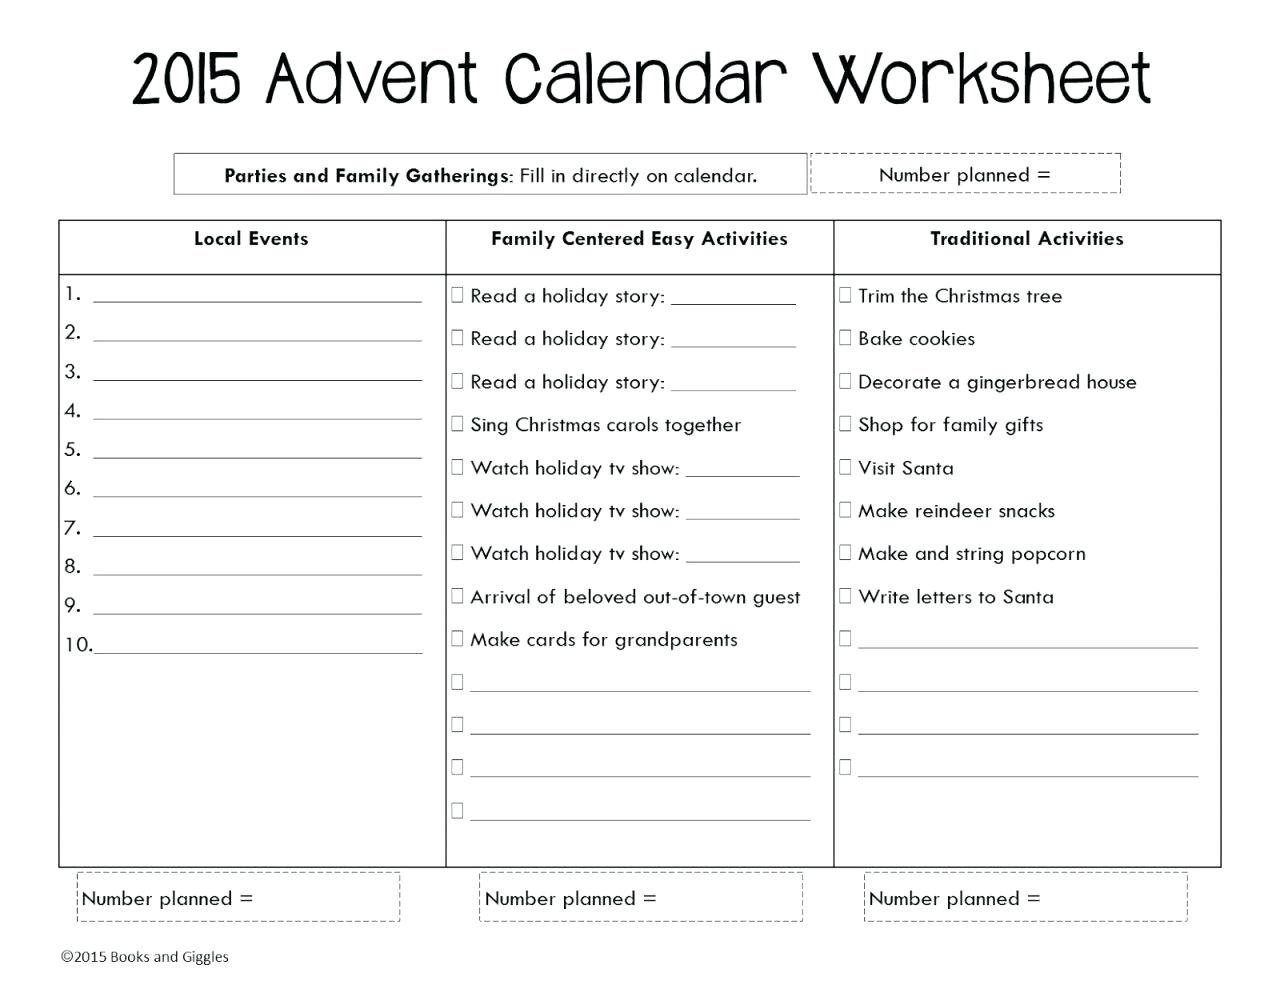 calendar-skills-worksheets-mrpageco-db-excel